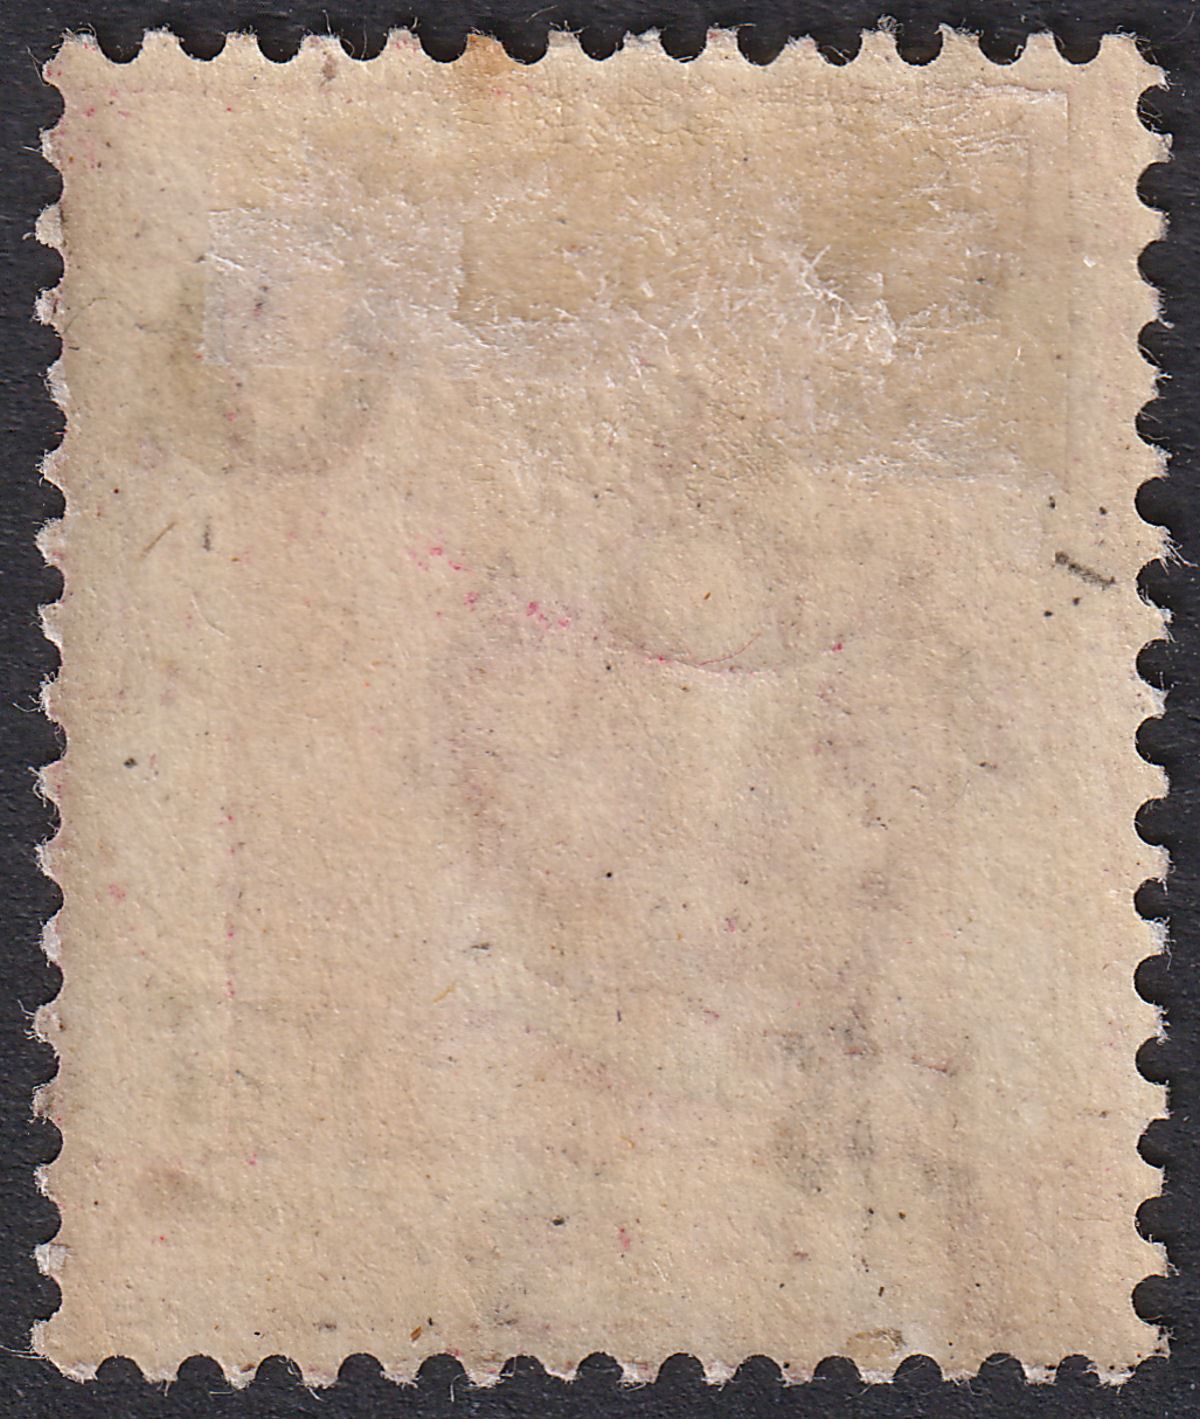 Hong Kong 1891 QV Stamp Office SO Overprint 2c Carmine Mint SG S1 cat £1000